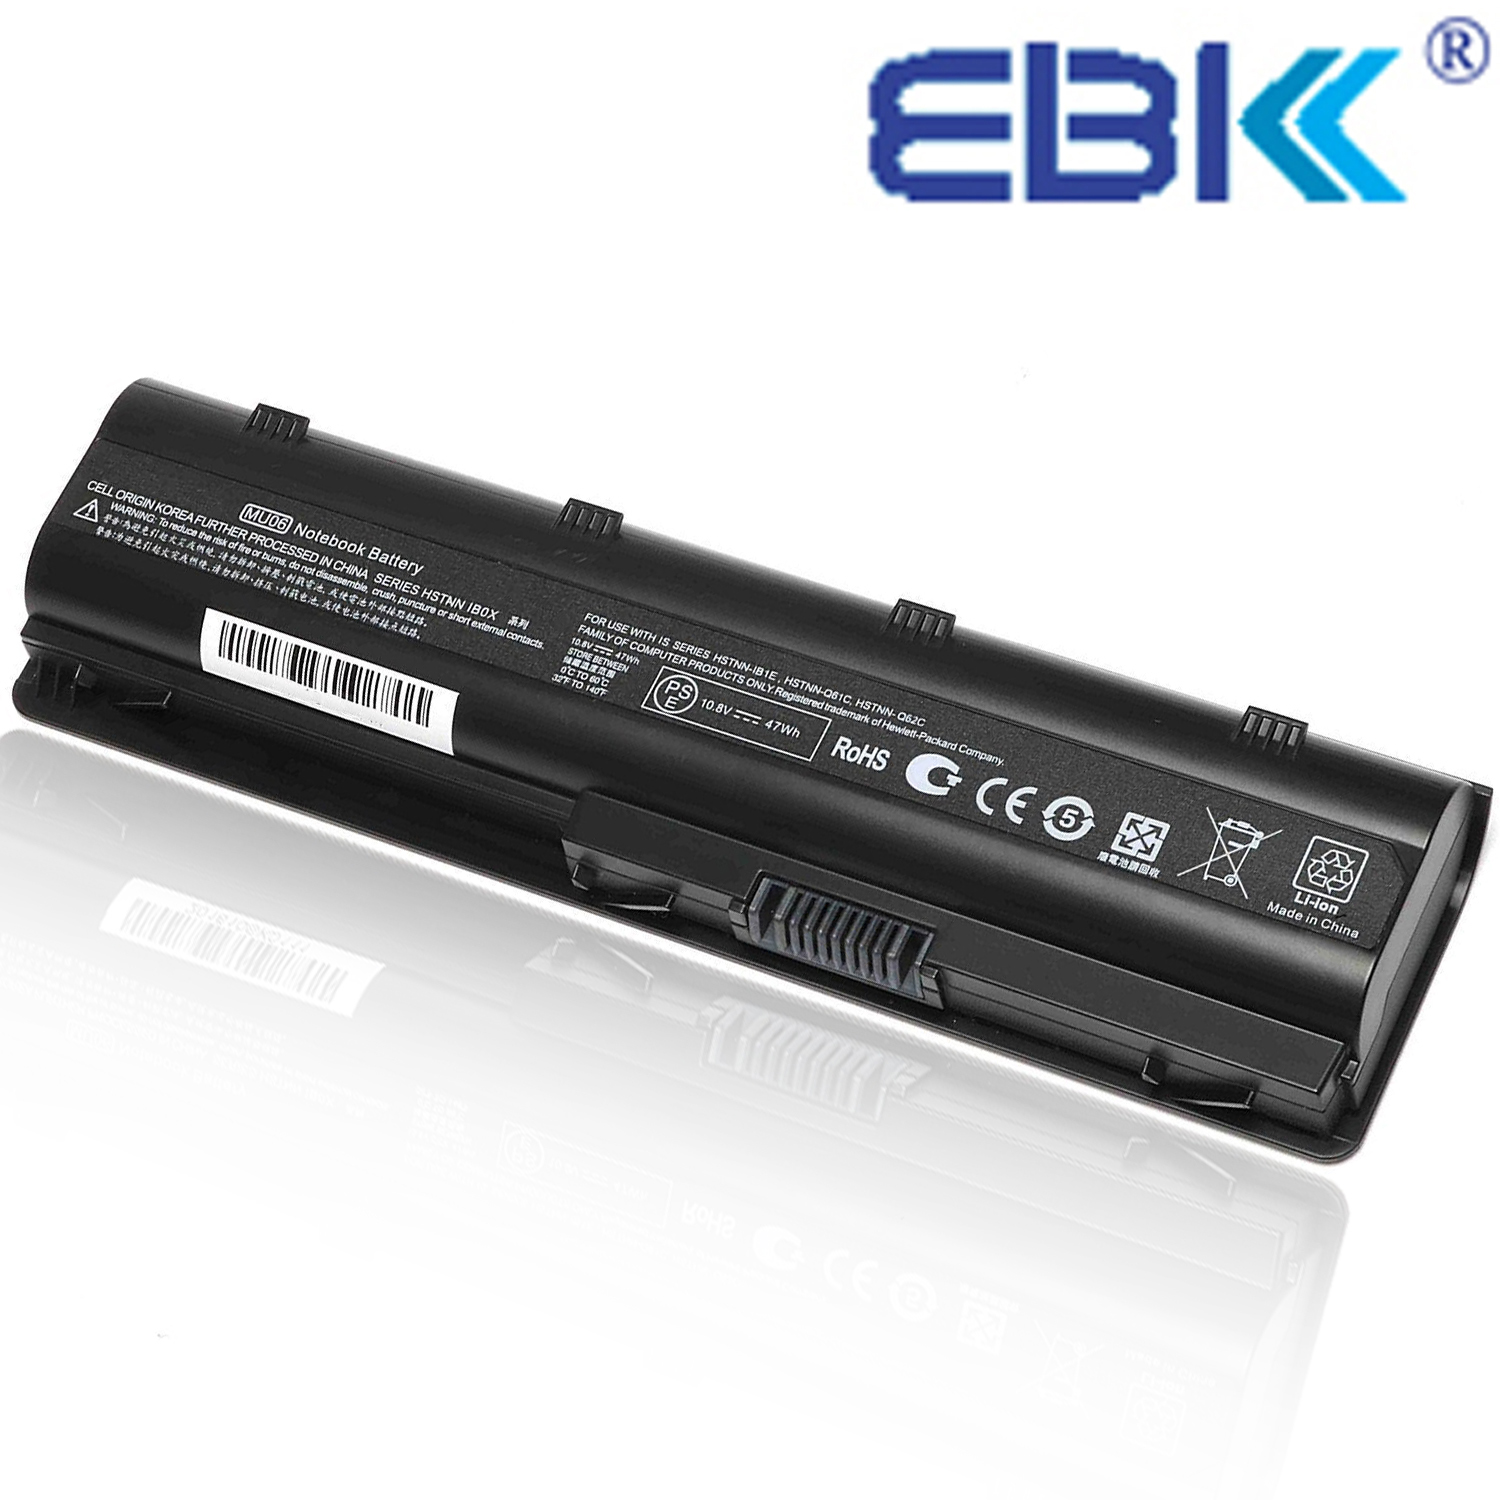 593553-001 - Brand New HP Laptop Battery - MU06 MU09 593554-001 (EXTENDED LIFE) EBK - 12 months warranty - image 1 of 8